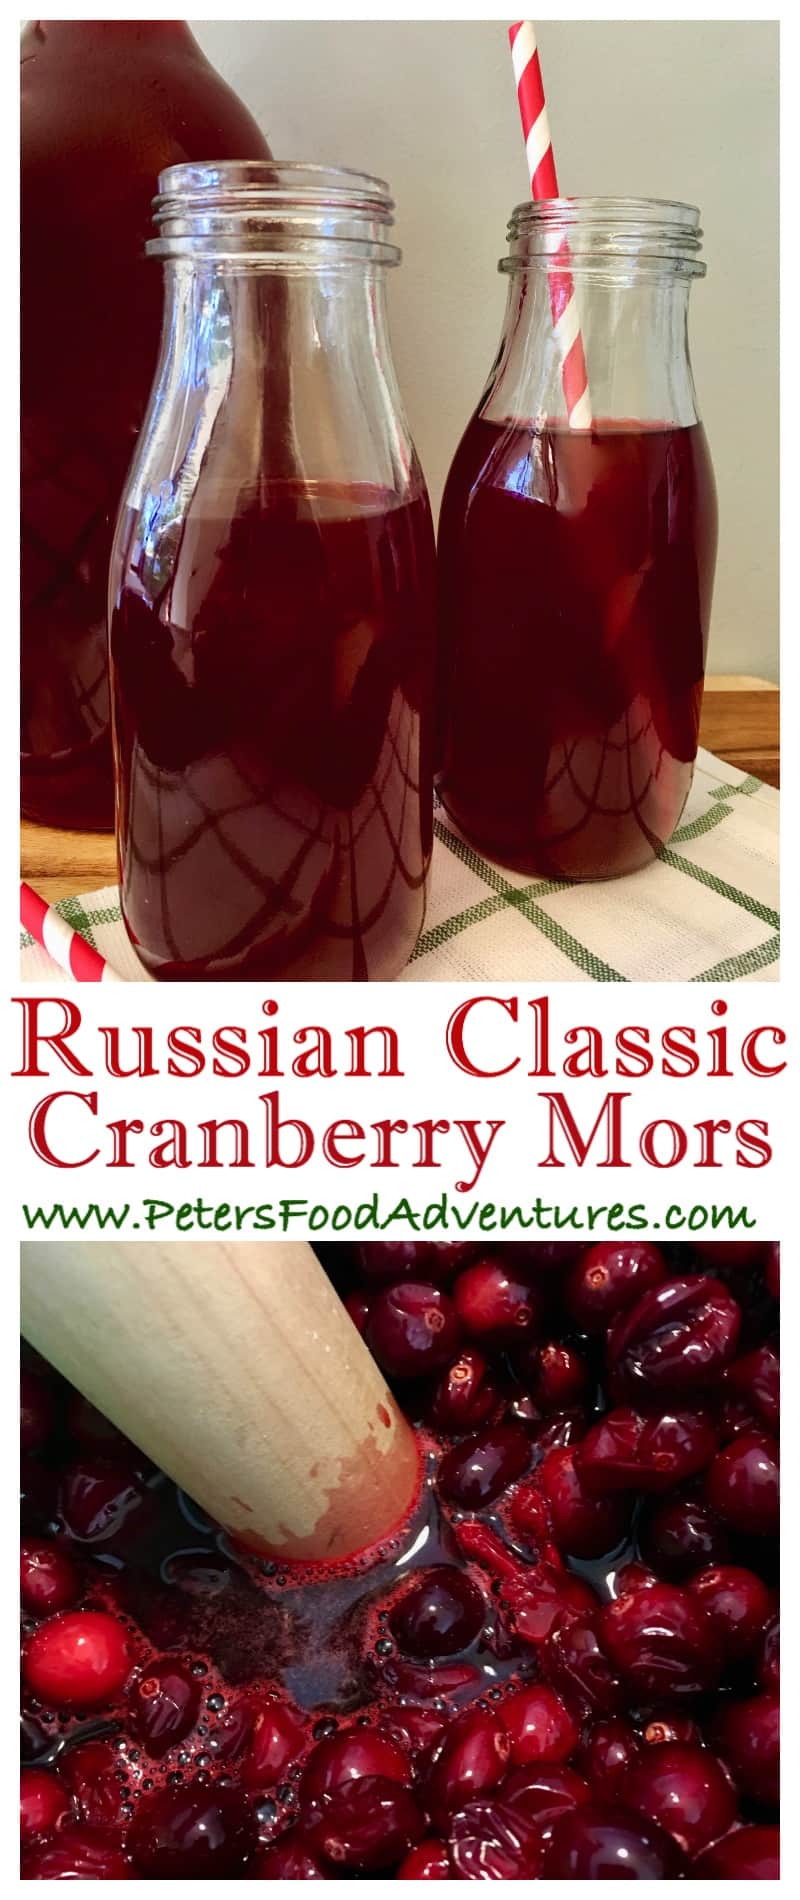 Cranberry Juice Recipe - Mors Drink - Peter's Food Adventures